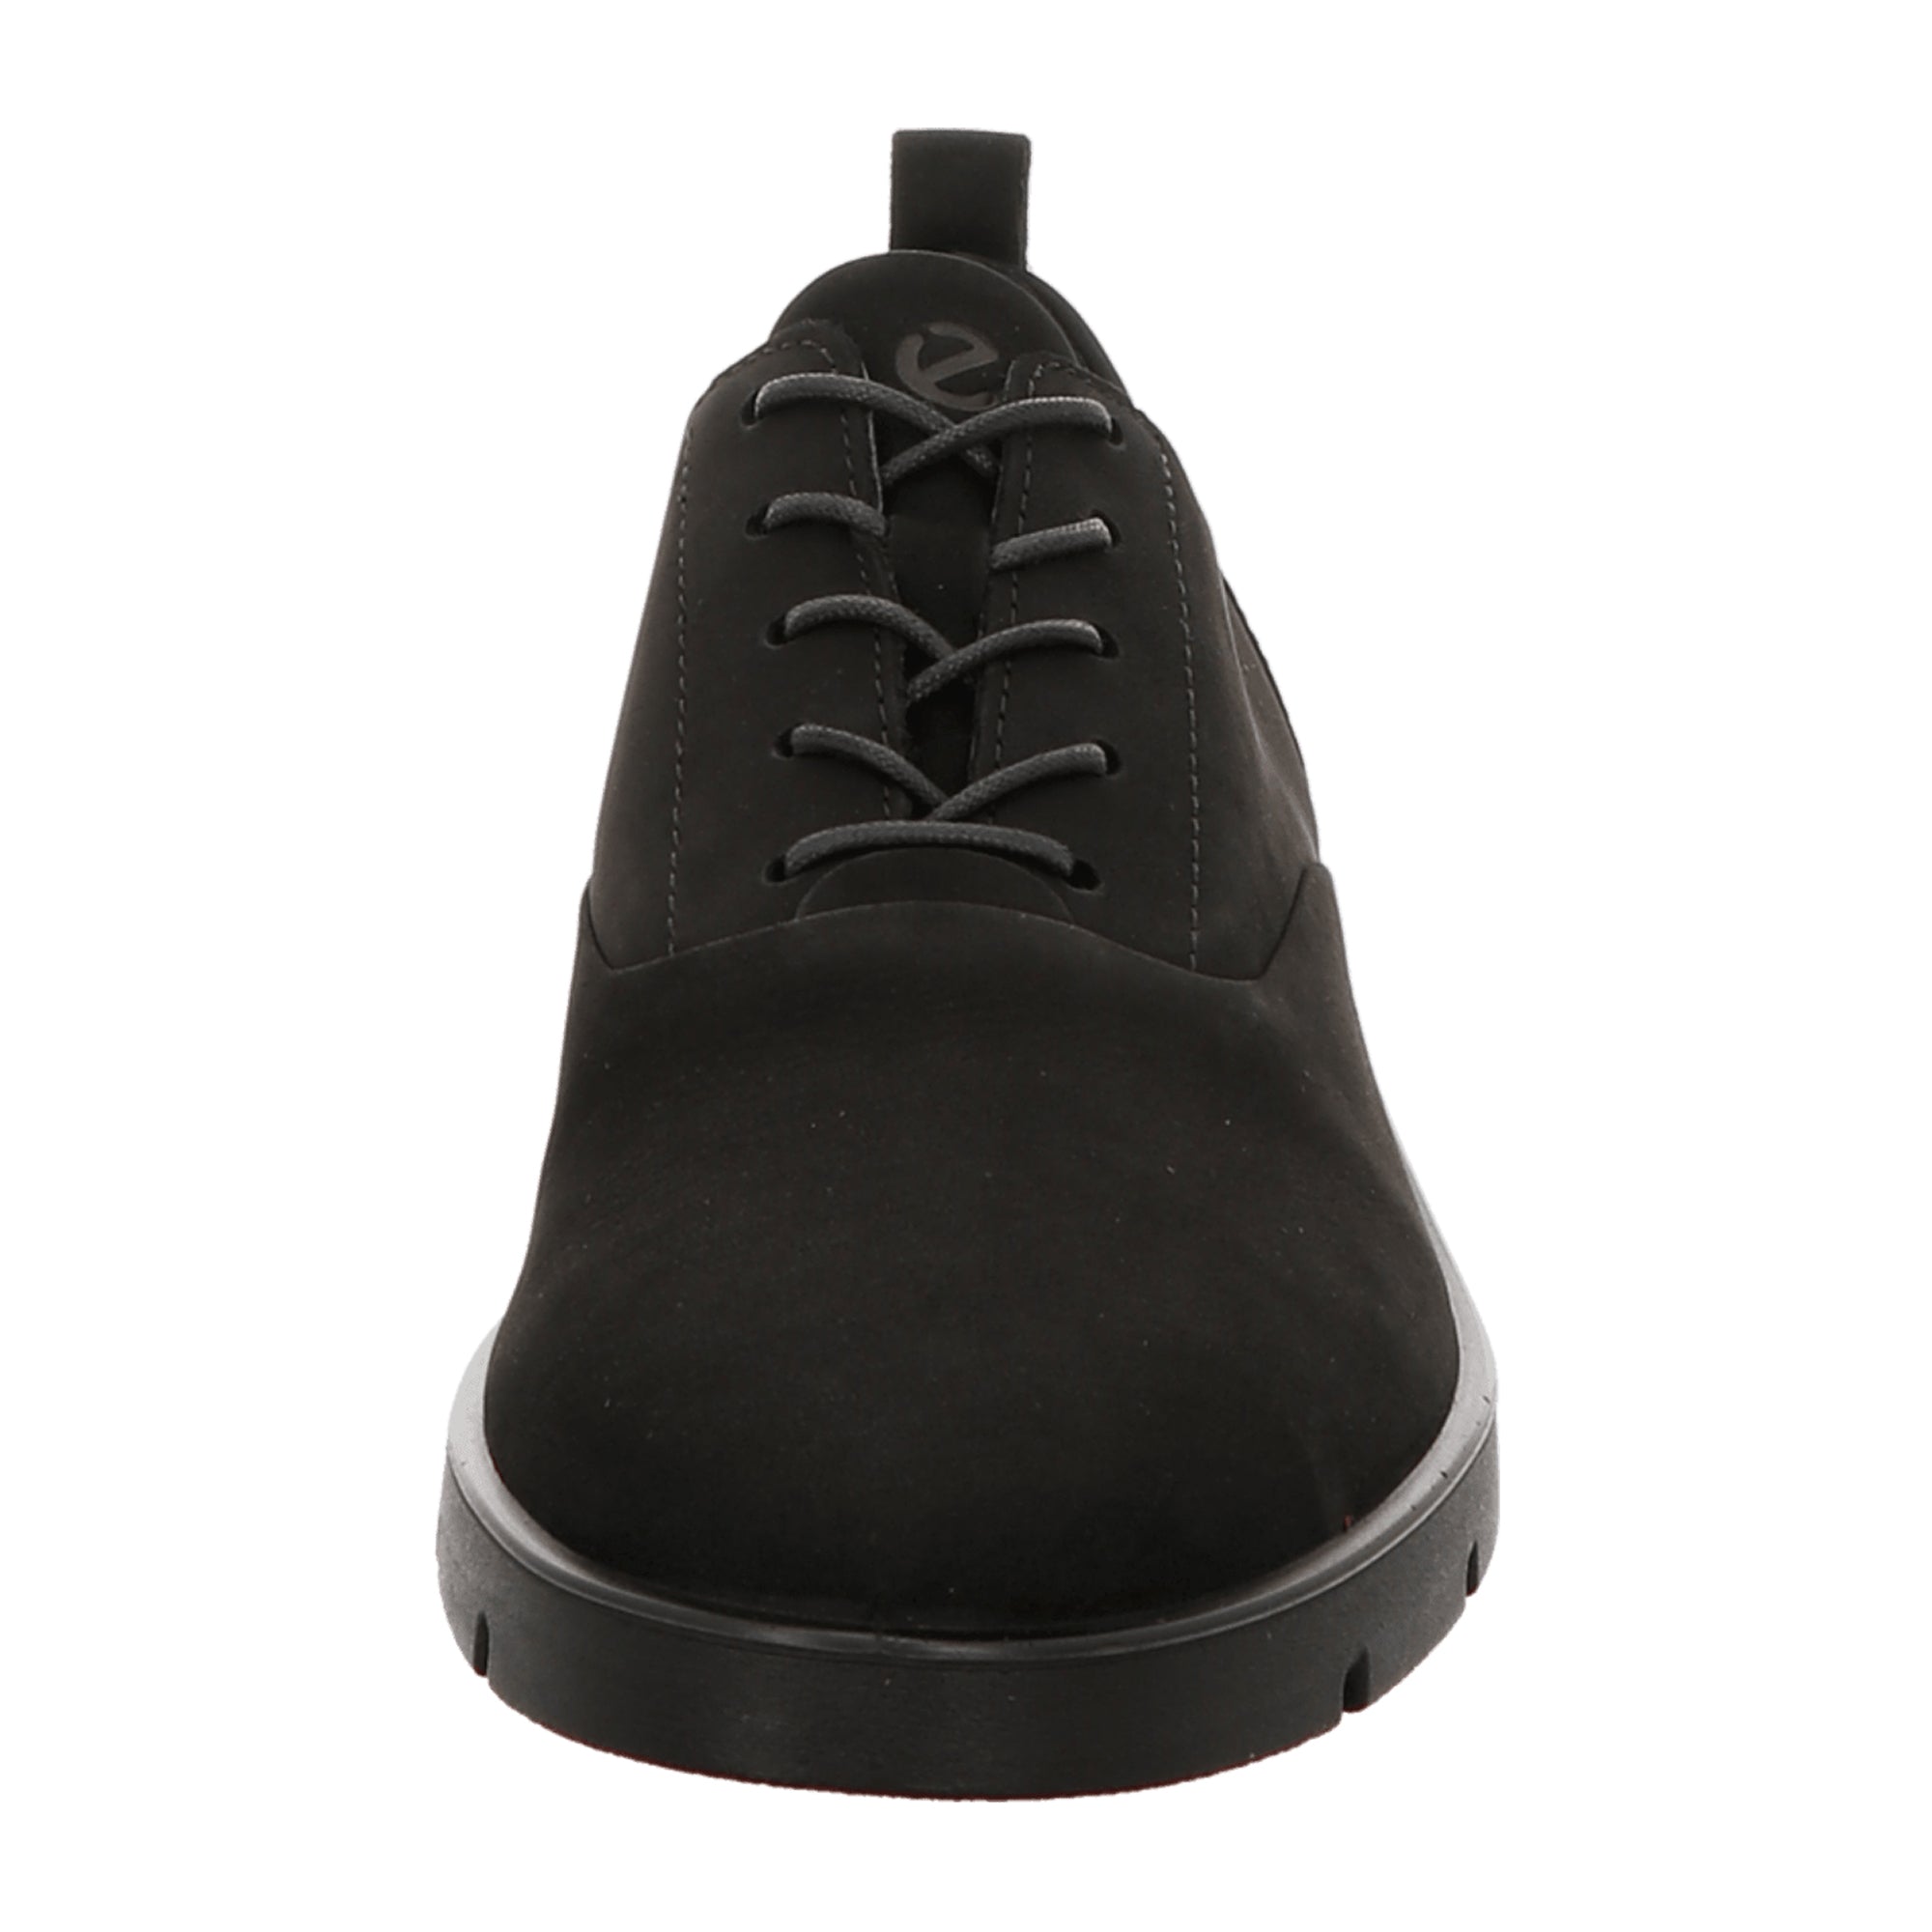 Ecco Bella Women's Black Nubuck Shoes 282313 - Stylish & Durable